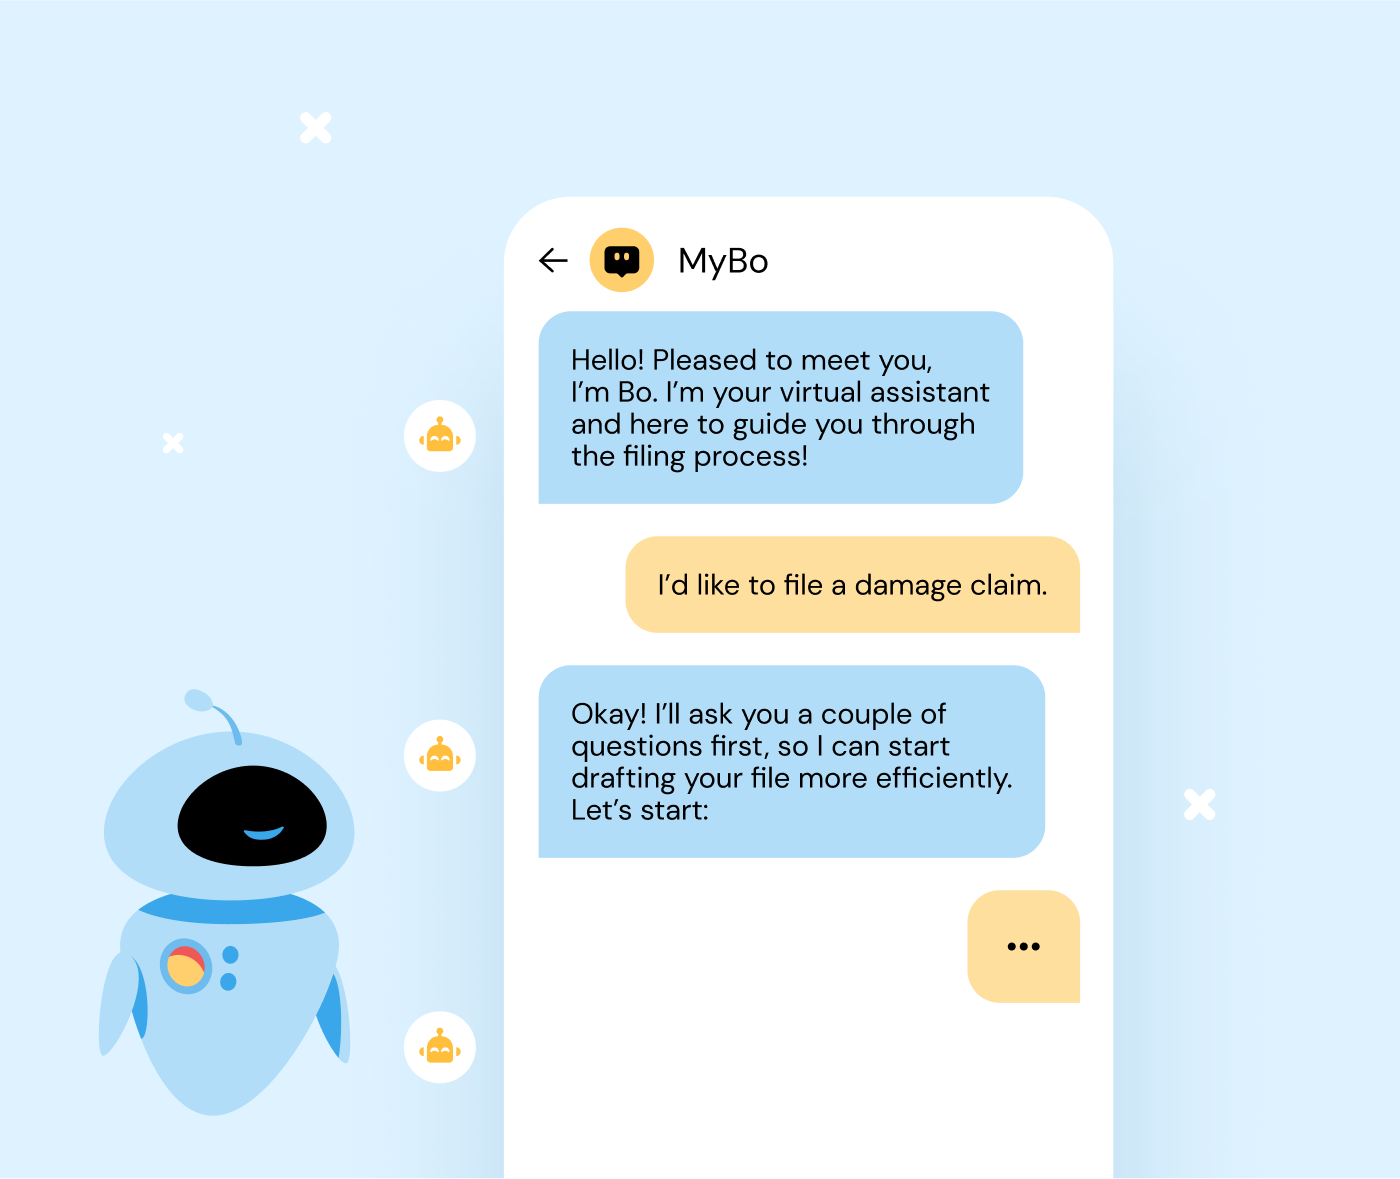 Insurance chatbot MyBo from Belfius